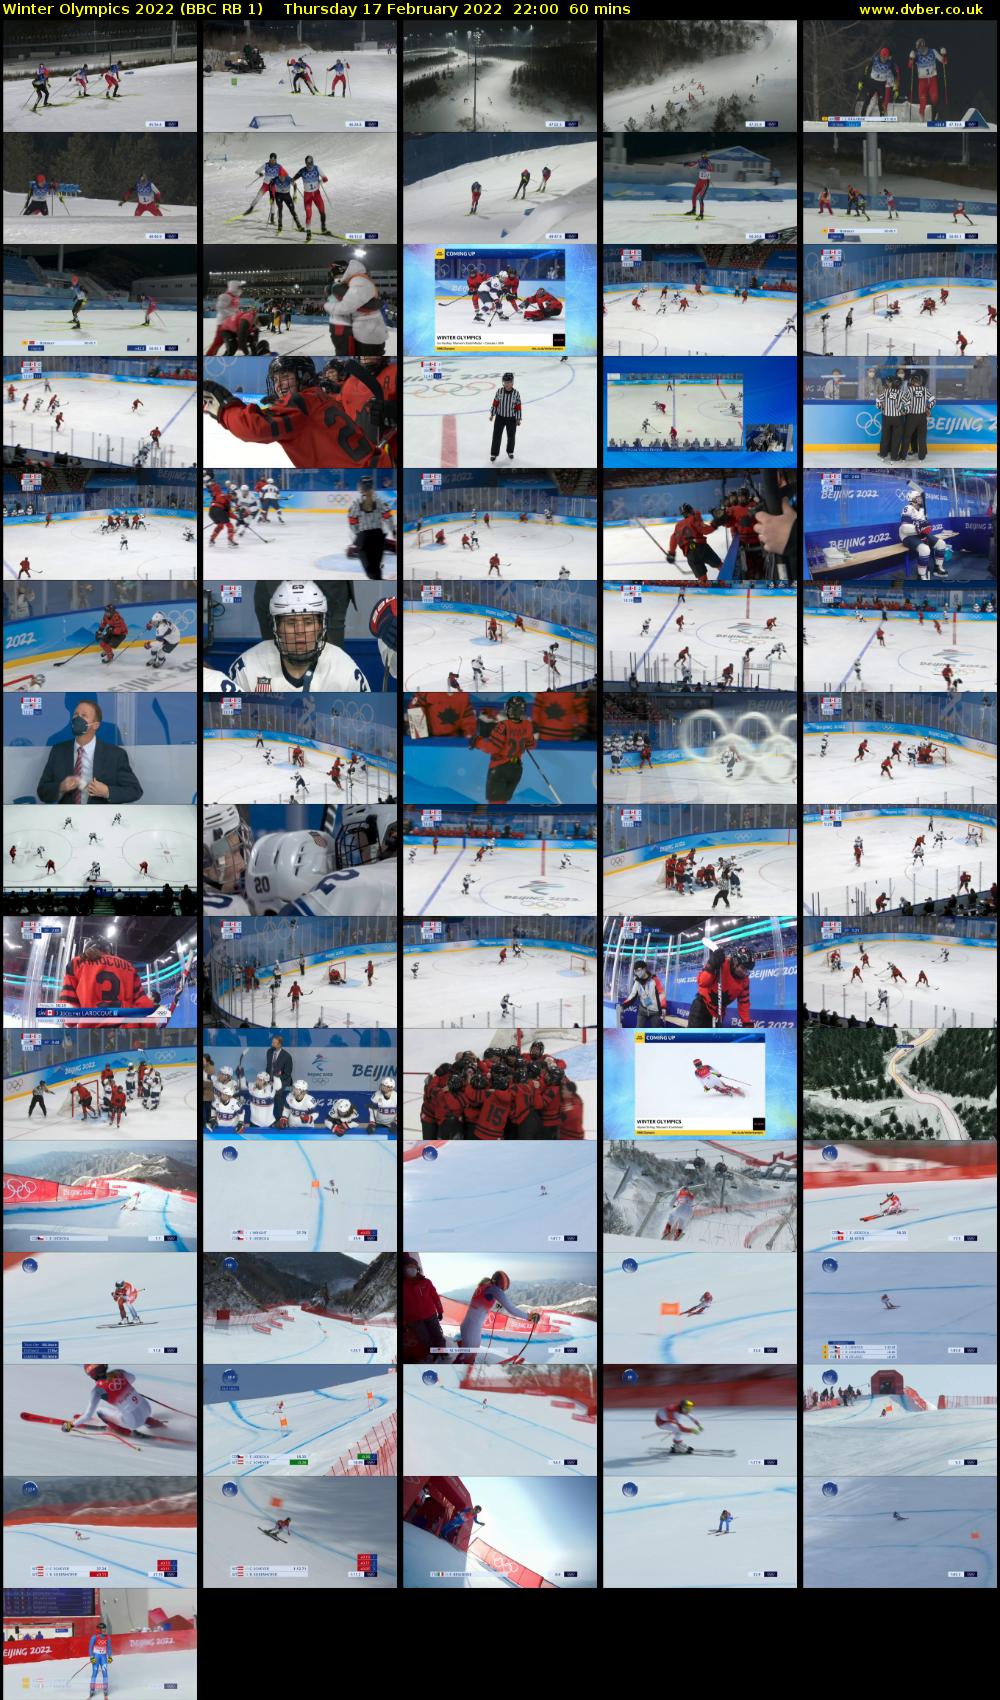 Winter Olympics 2022 (BBC RB 1) Thursday 17 February 2022 22:00 - 23:00